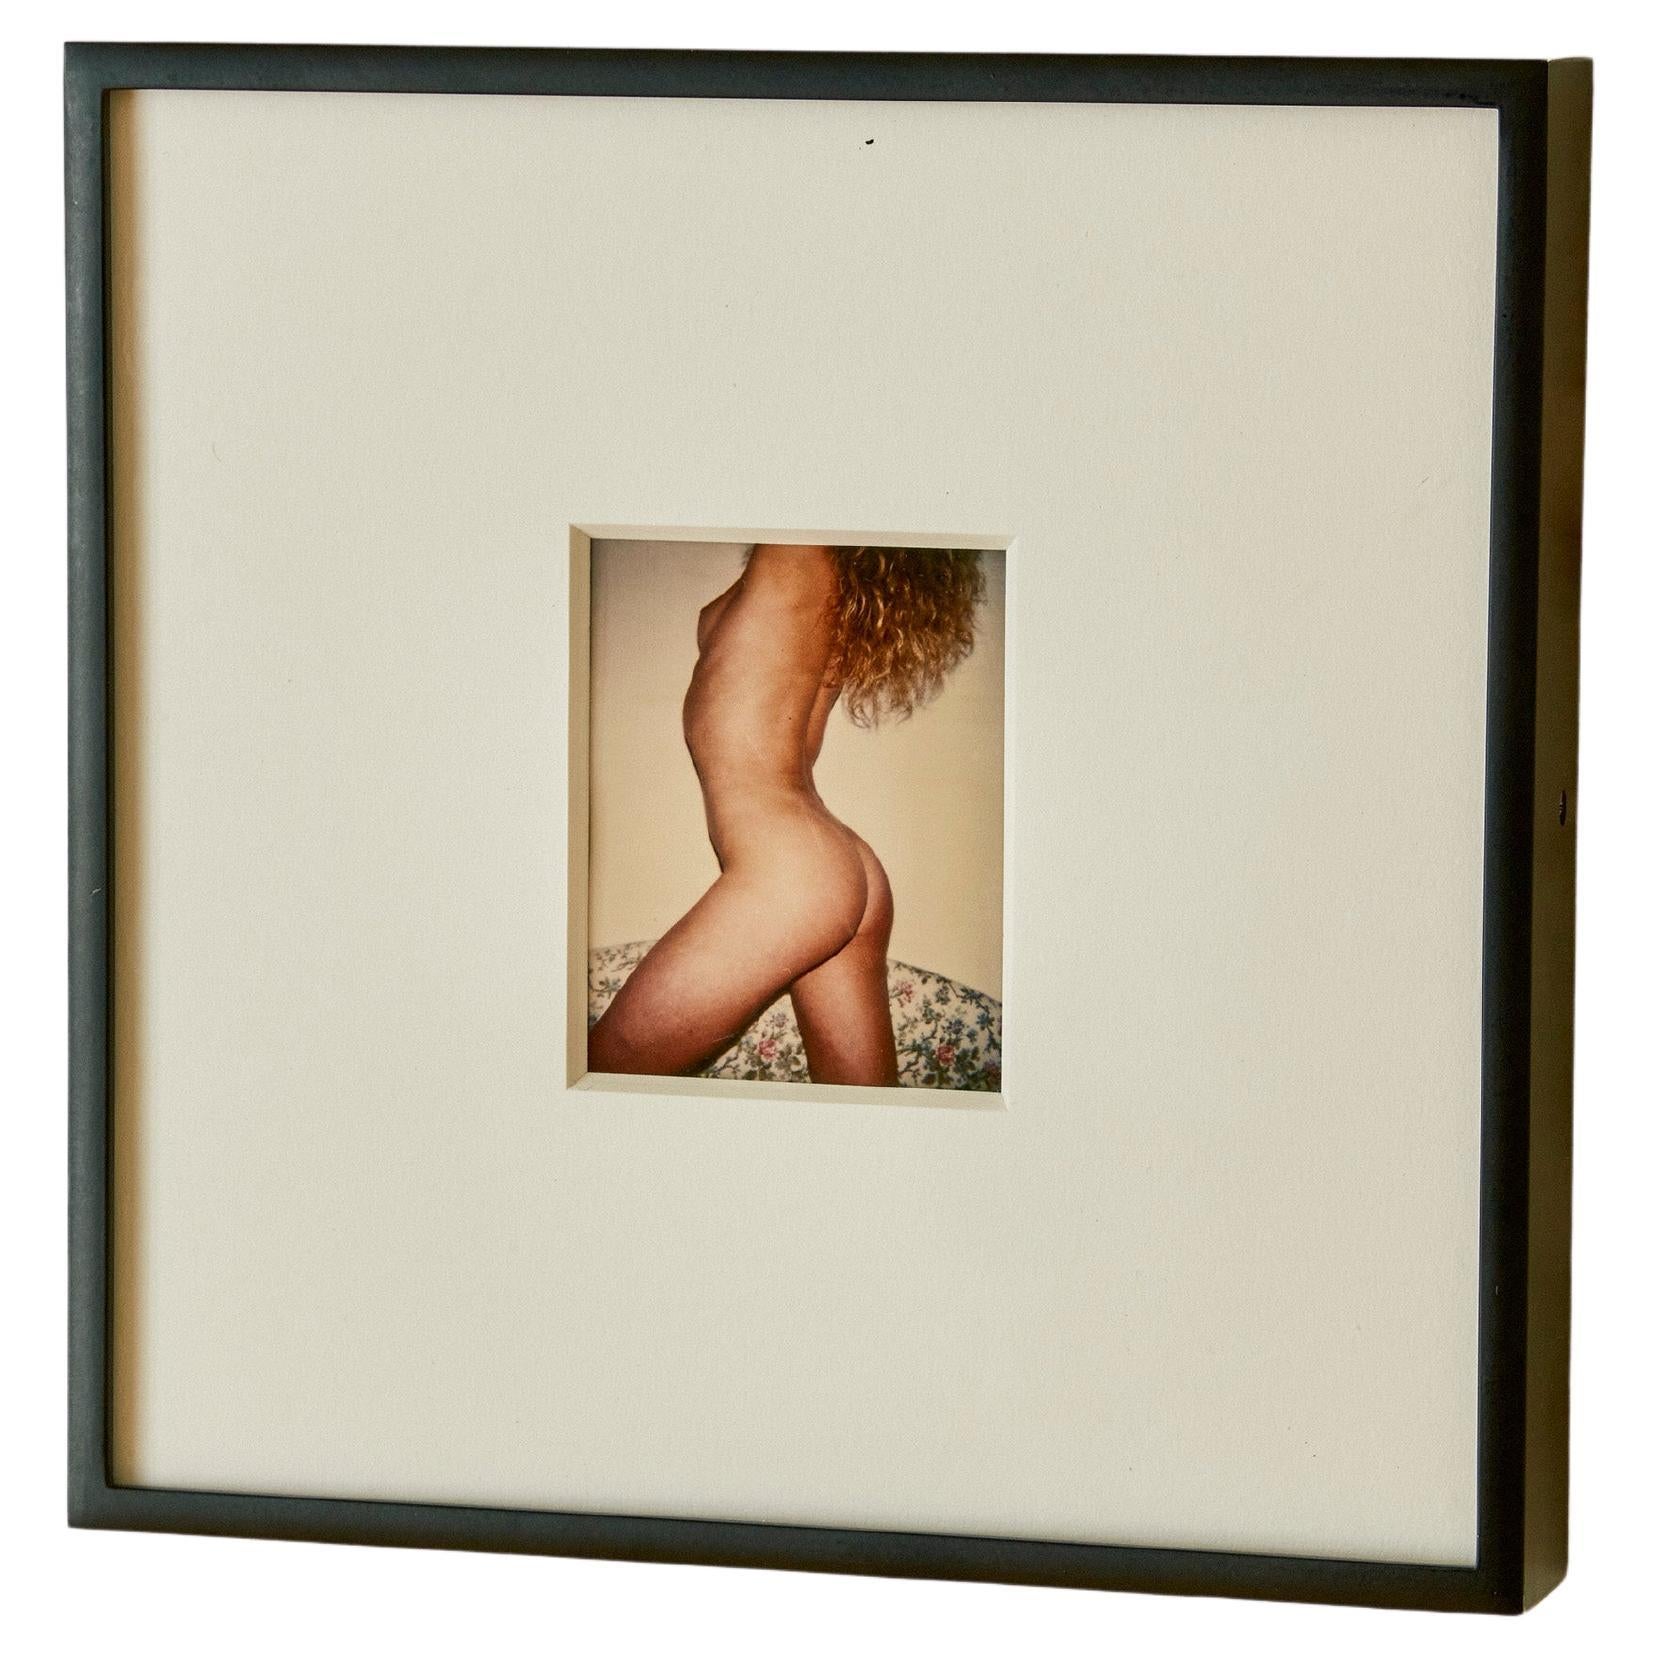 Untitled nude polaroid portrait by Franco Fontana